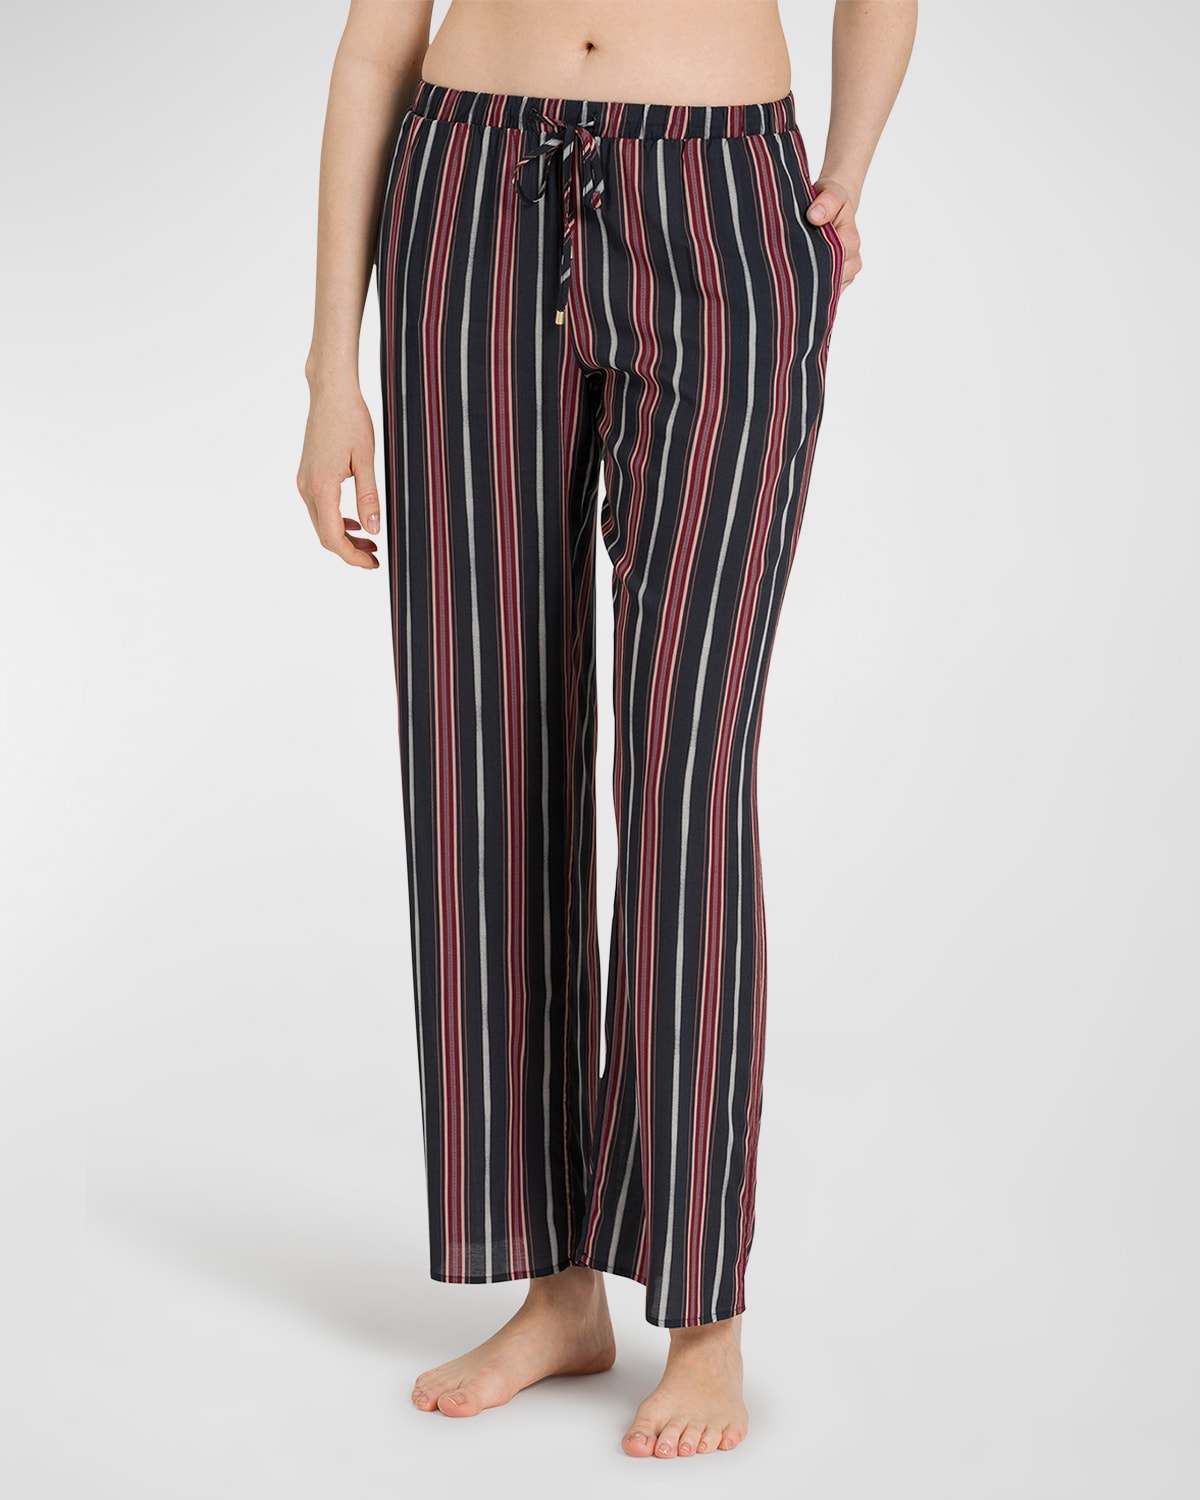 Hanro Sleep & Lounge Printed Knit Long Pants In Marsala Stripe